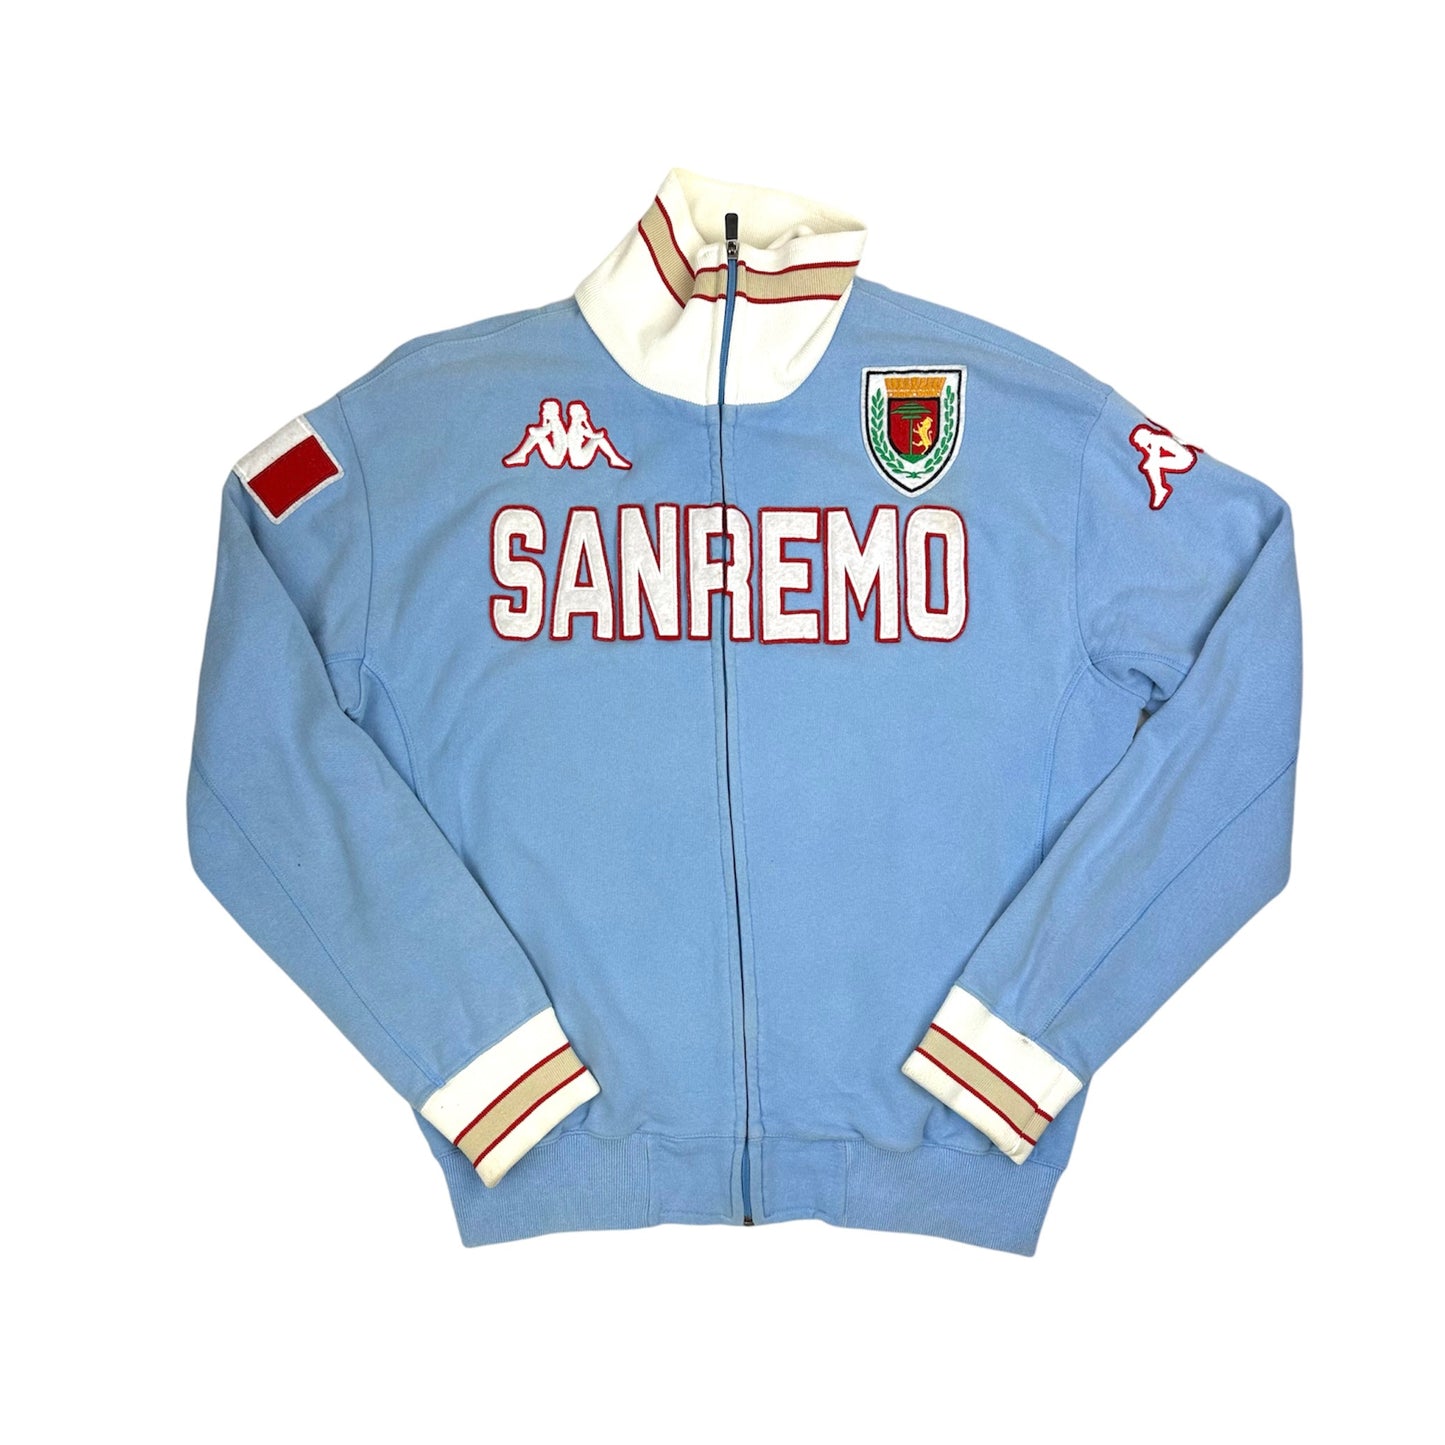 Kappa Sanremo Jacket